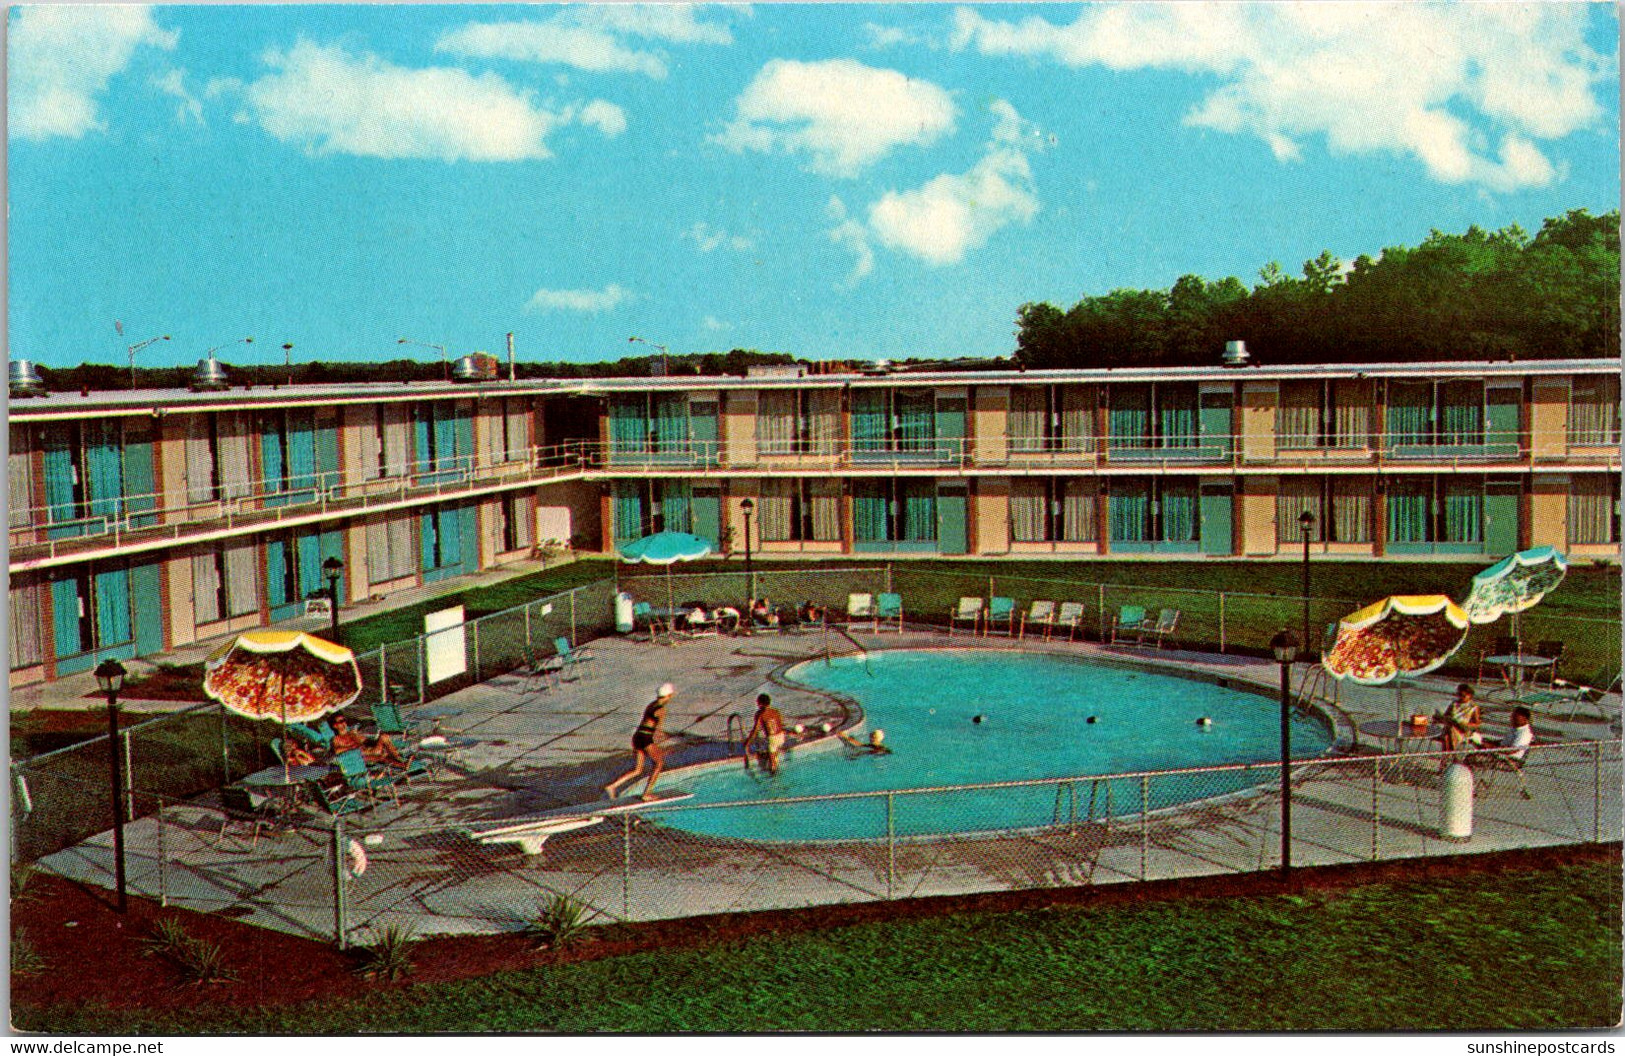 Delaware Wilington Holiday Inn No 2 Southwest - Wilmington